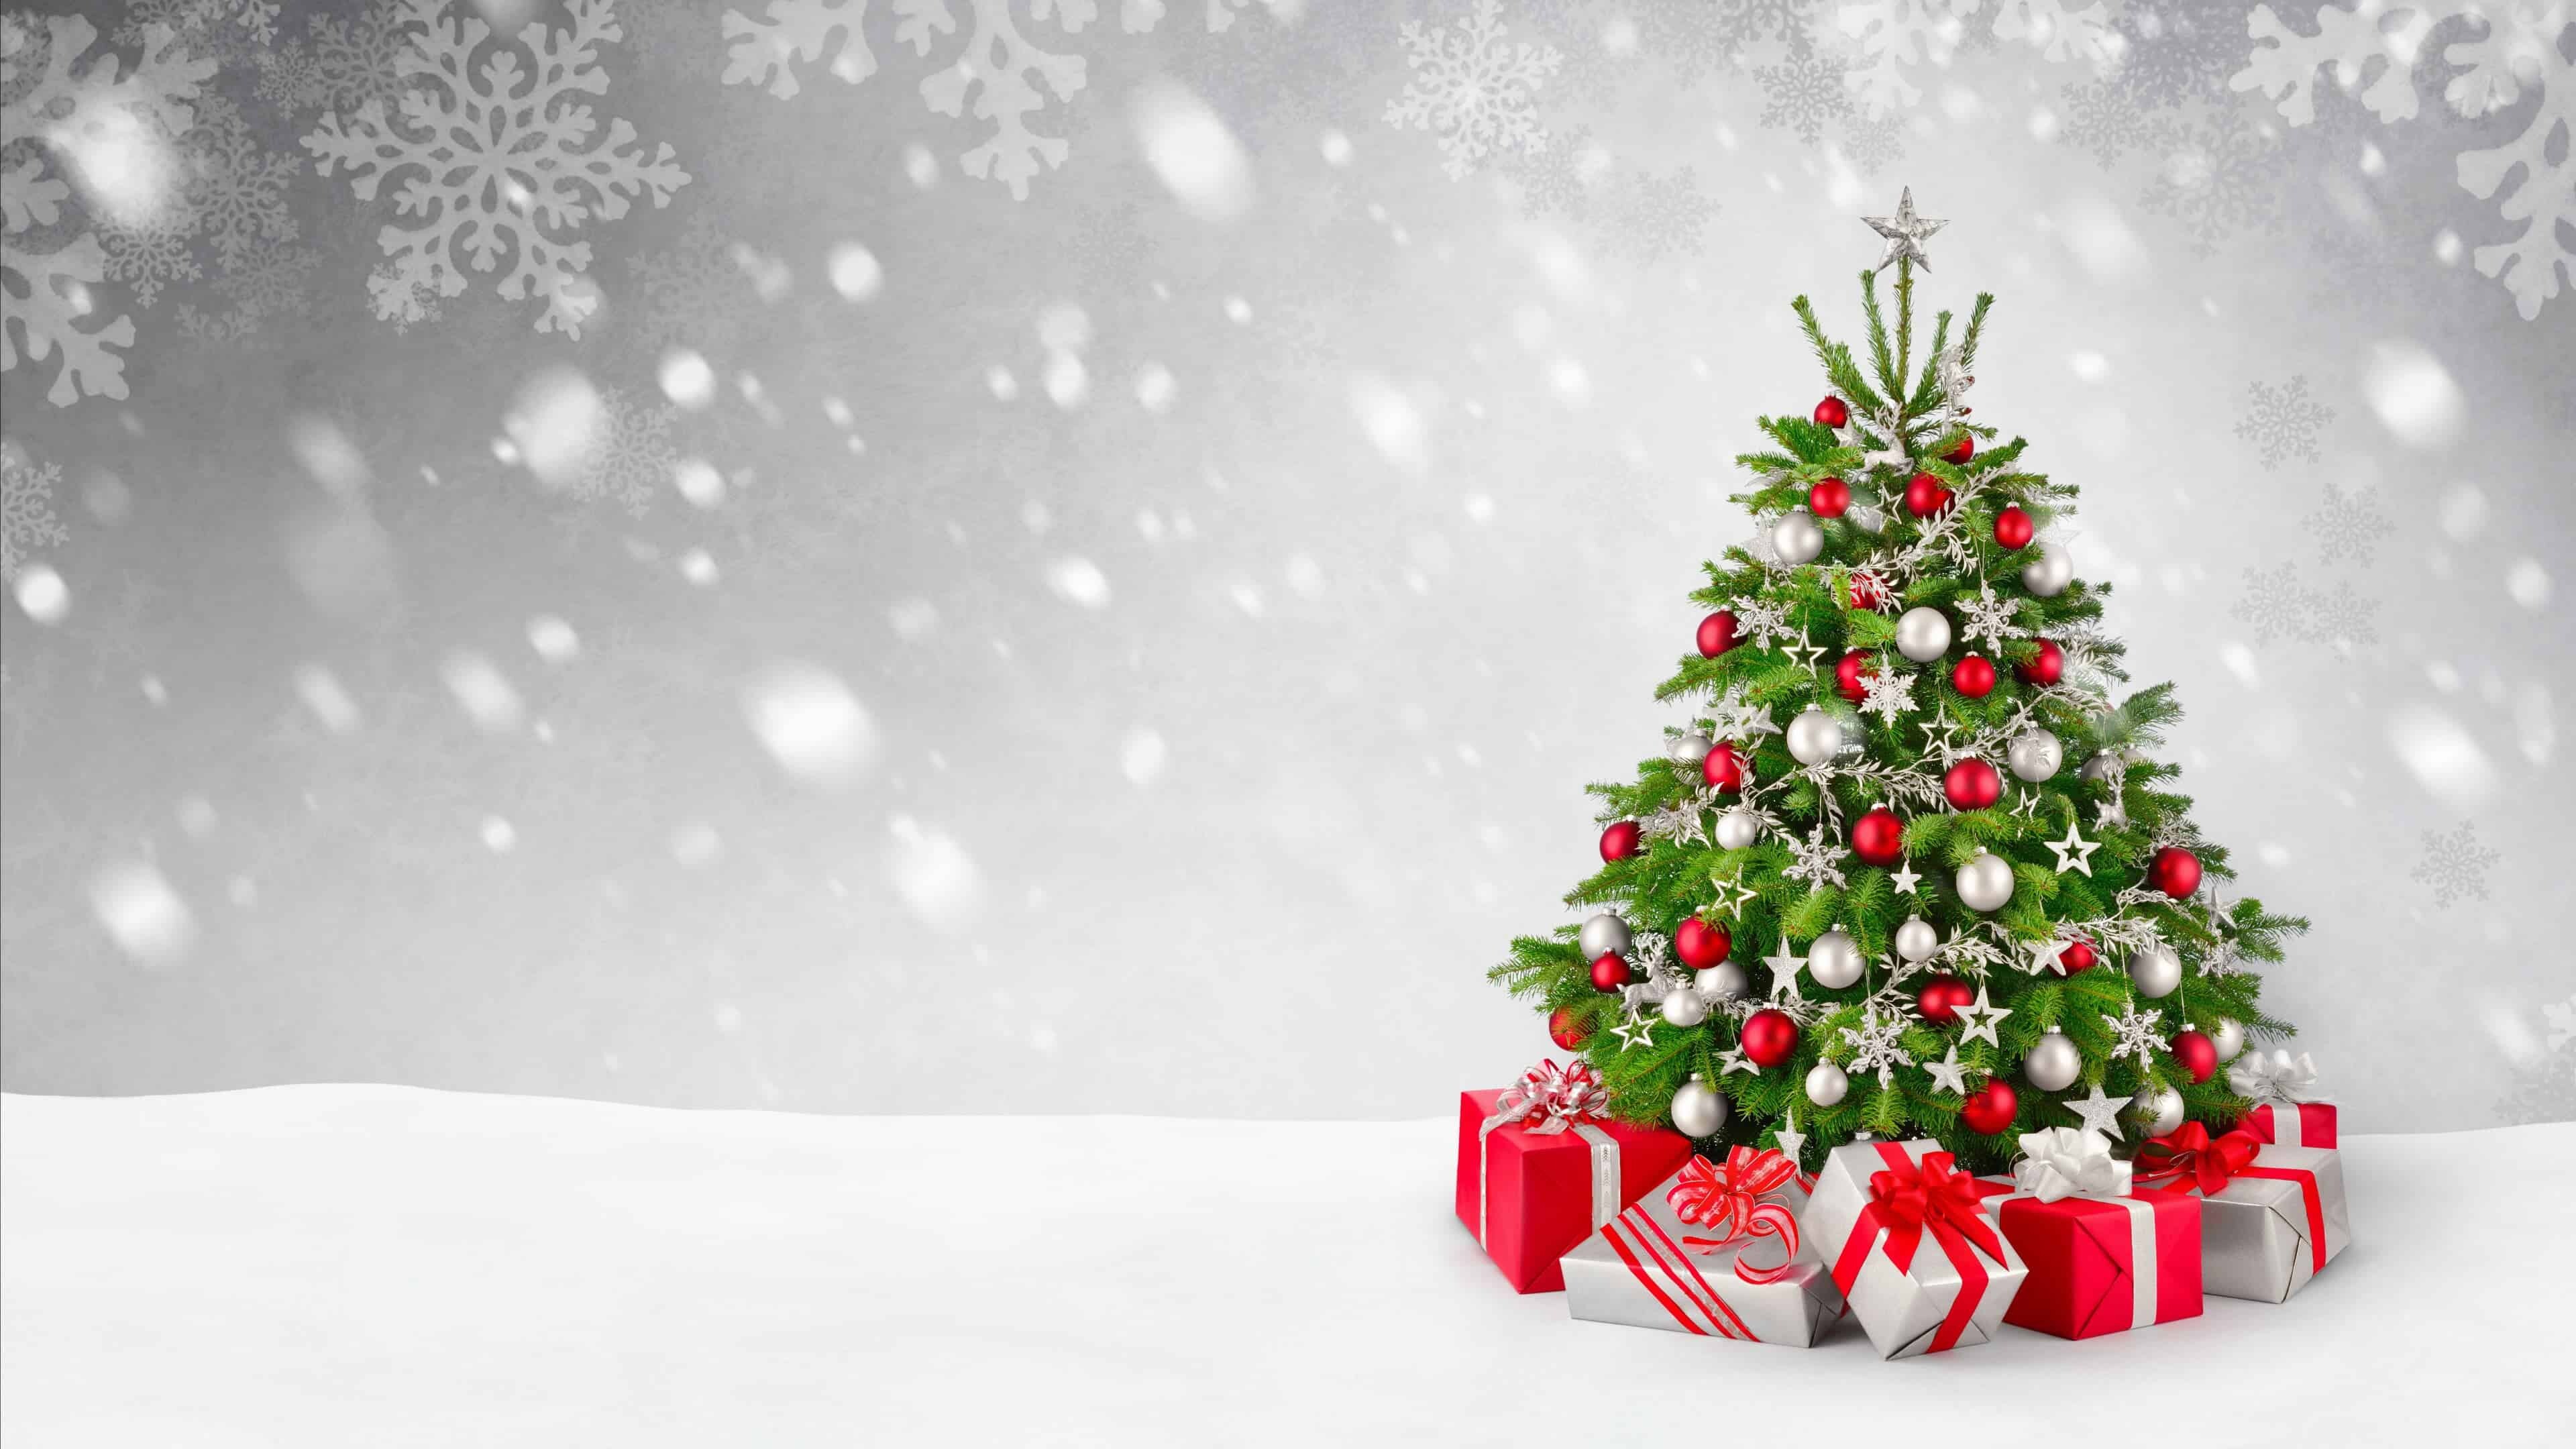 Christmas Ornament: Xmas tree and gifts, Winter holidays. 3840x2160 4K Wallpaper.